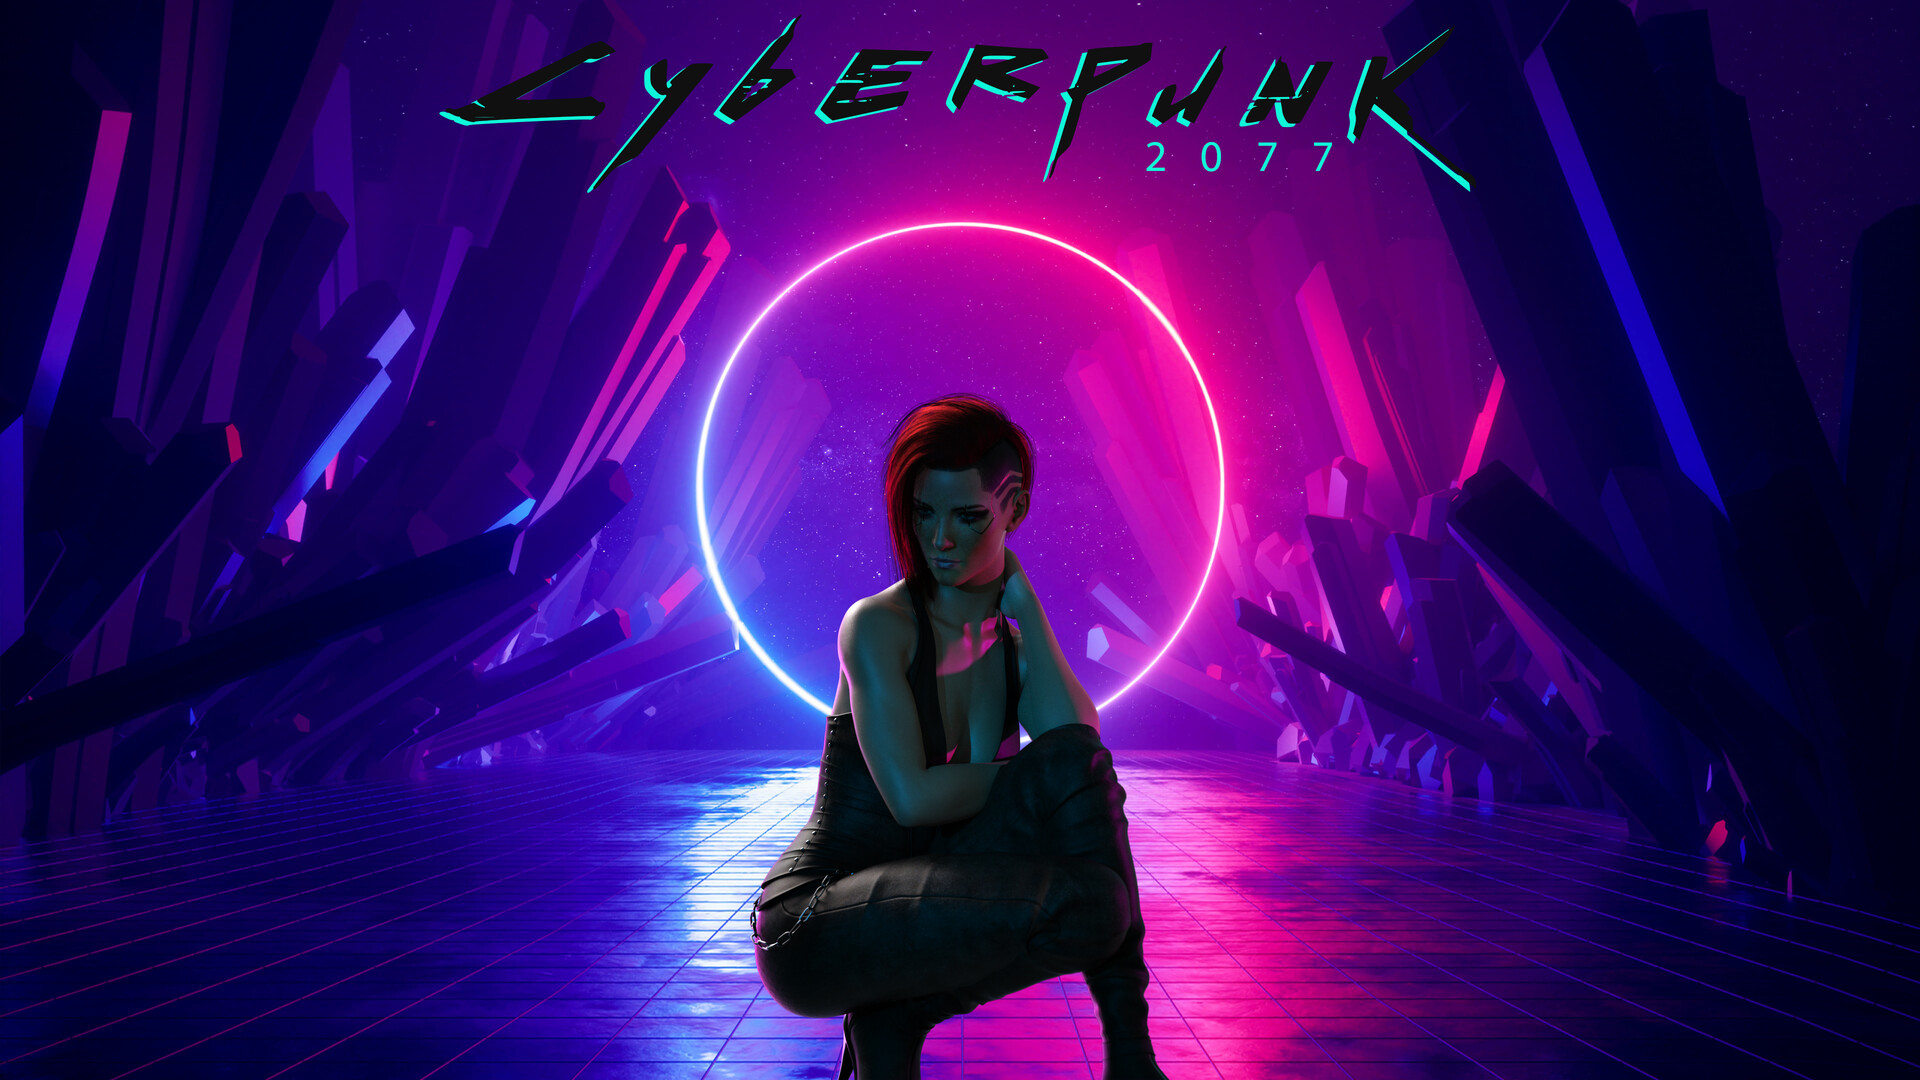 Cyberpunk 2077 4k wallpaper pack by ValencyGraphics on DeviantArt